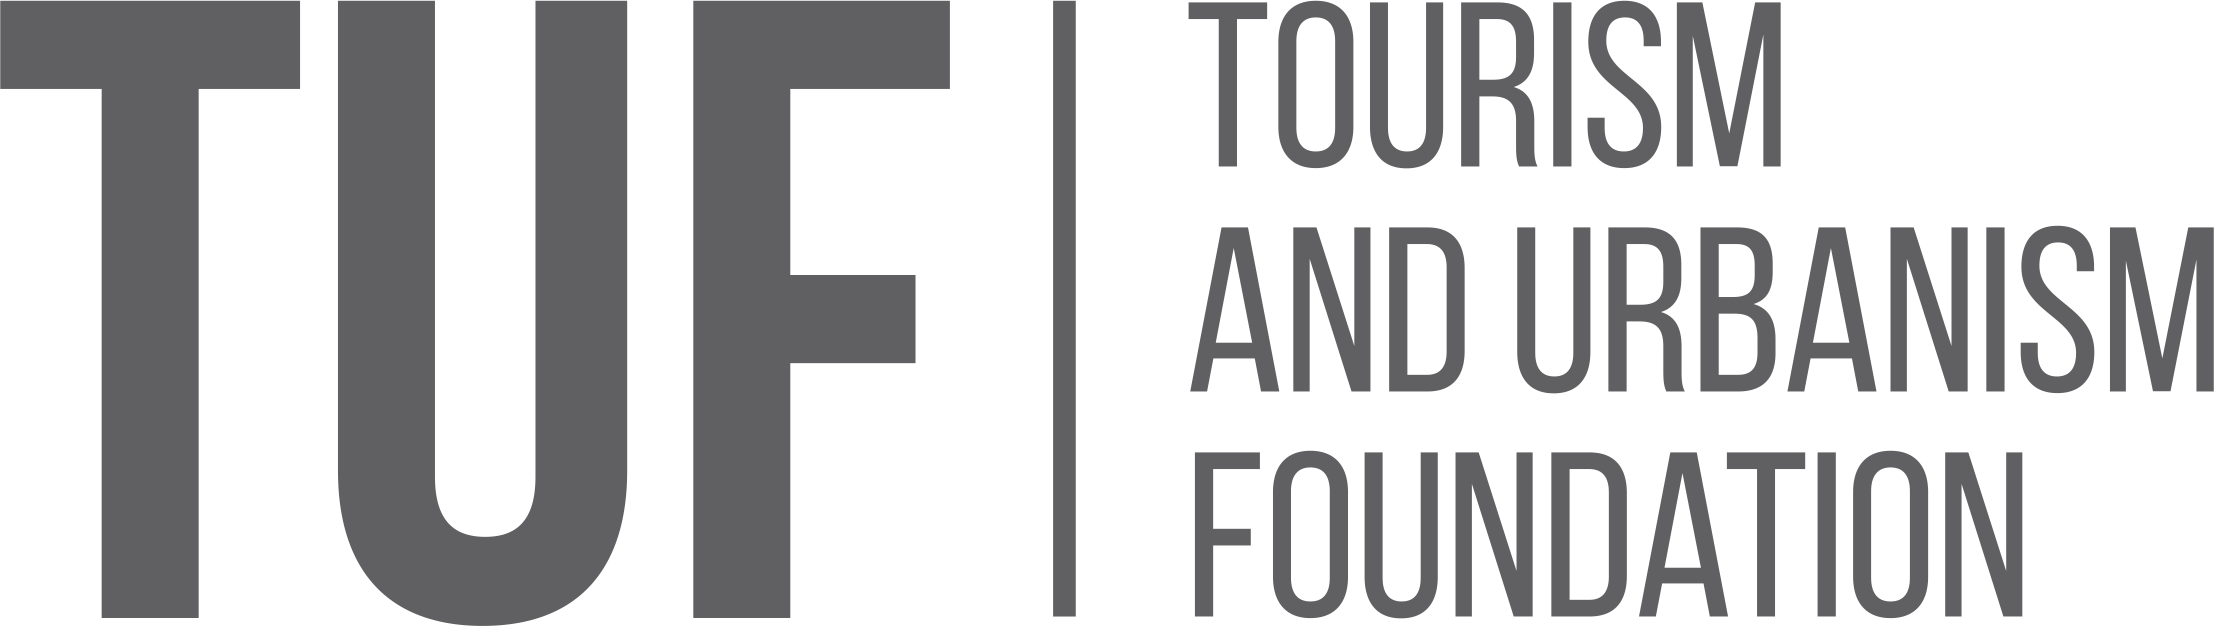 Tourism and Urbanism Foundation (TUF)